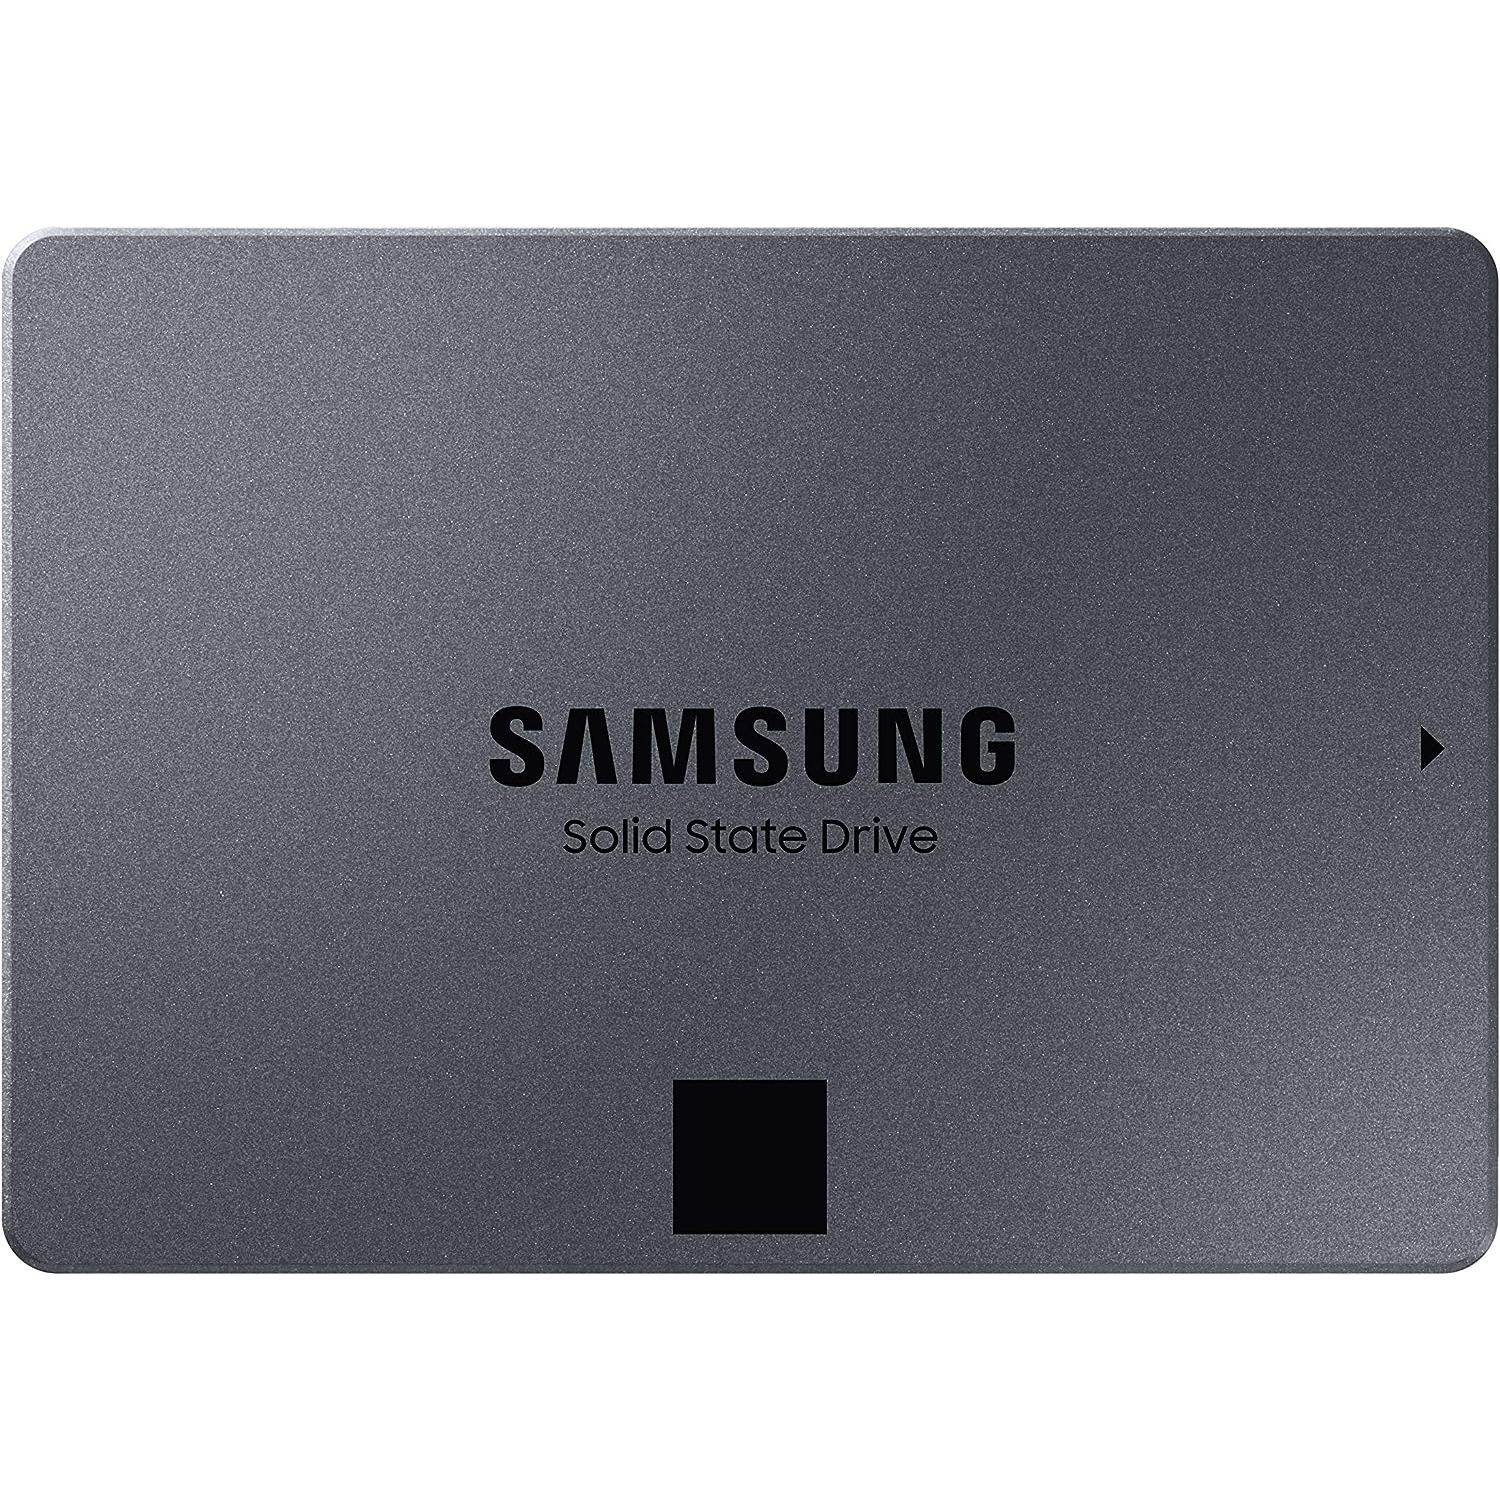 Refurbished (Good) Samsung 870 QVO-Series - 4TB SSD 2.5" - SATA III Internal Solid State Drive